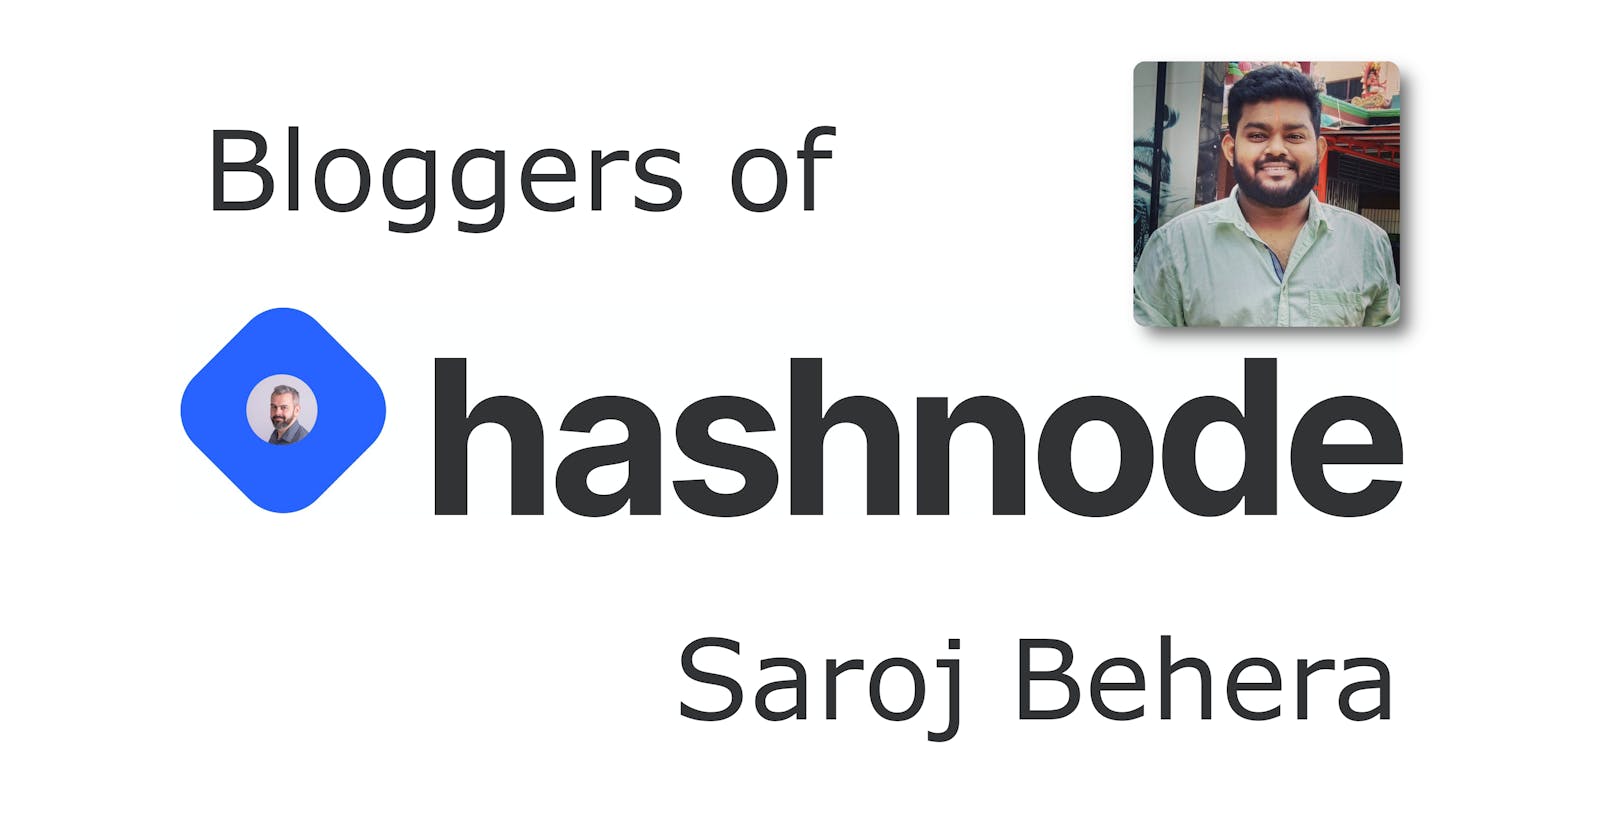 Saroj Behera, Software Engineer AKA Bloggers of Hashnode by Miki Szeles 001